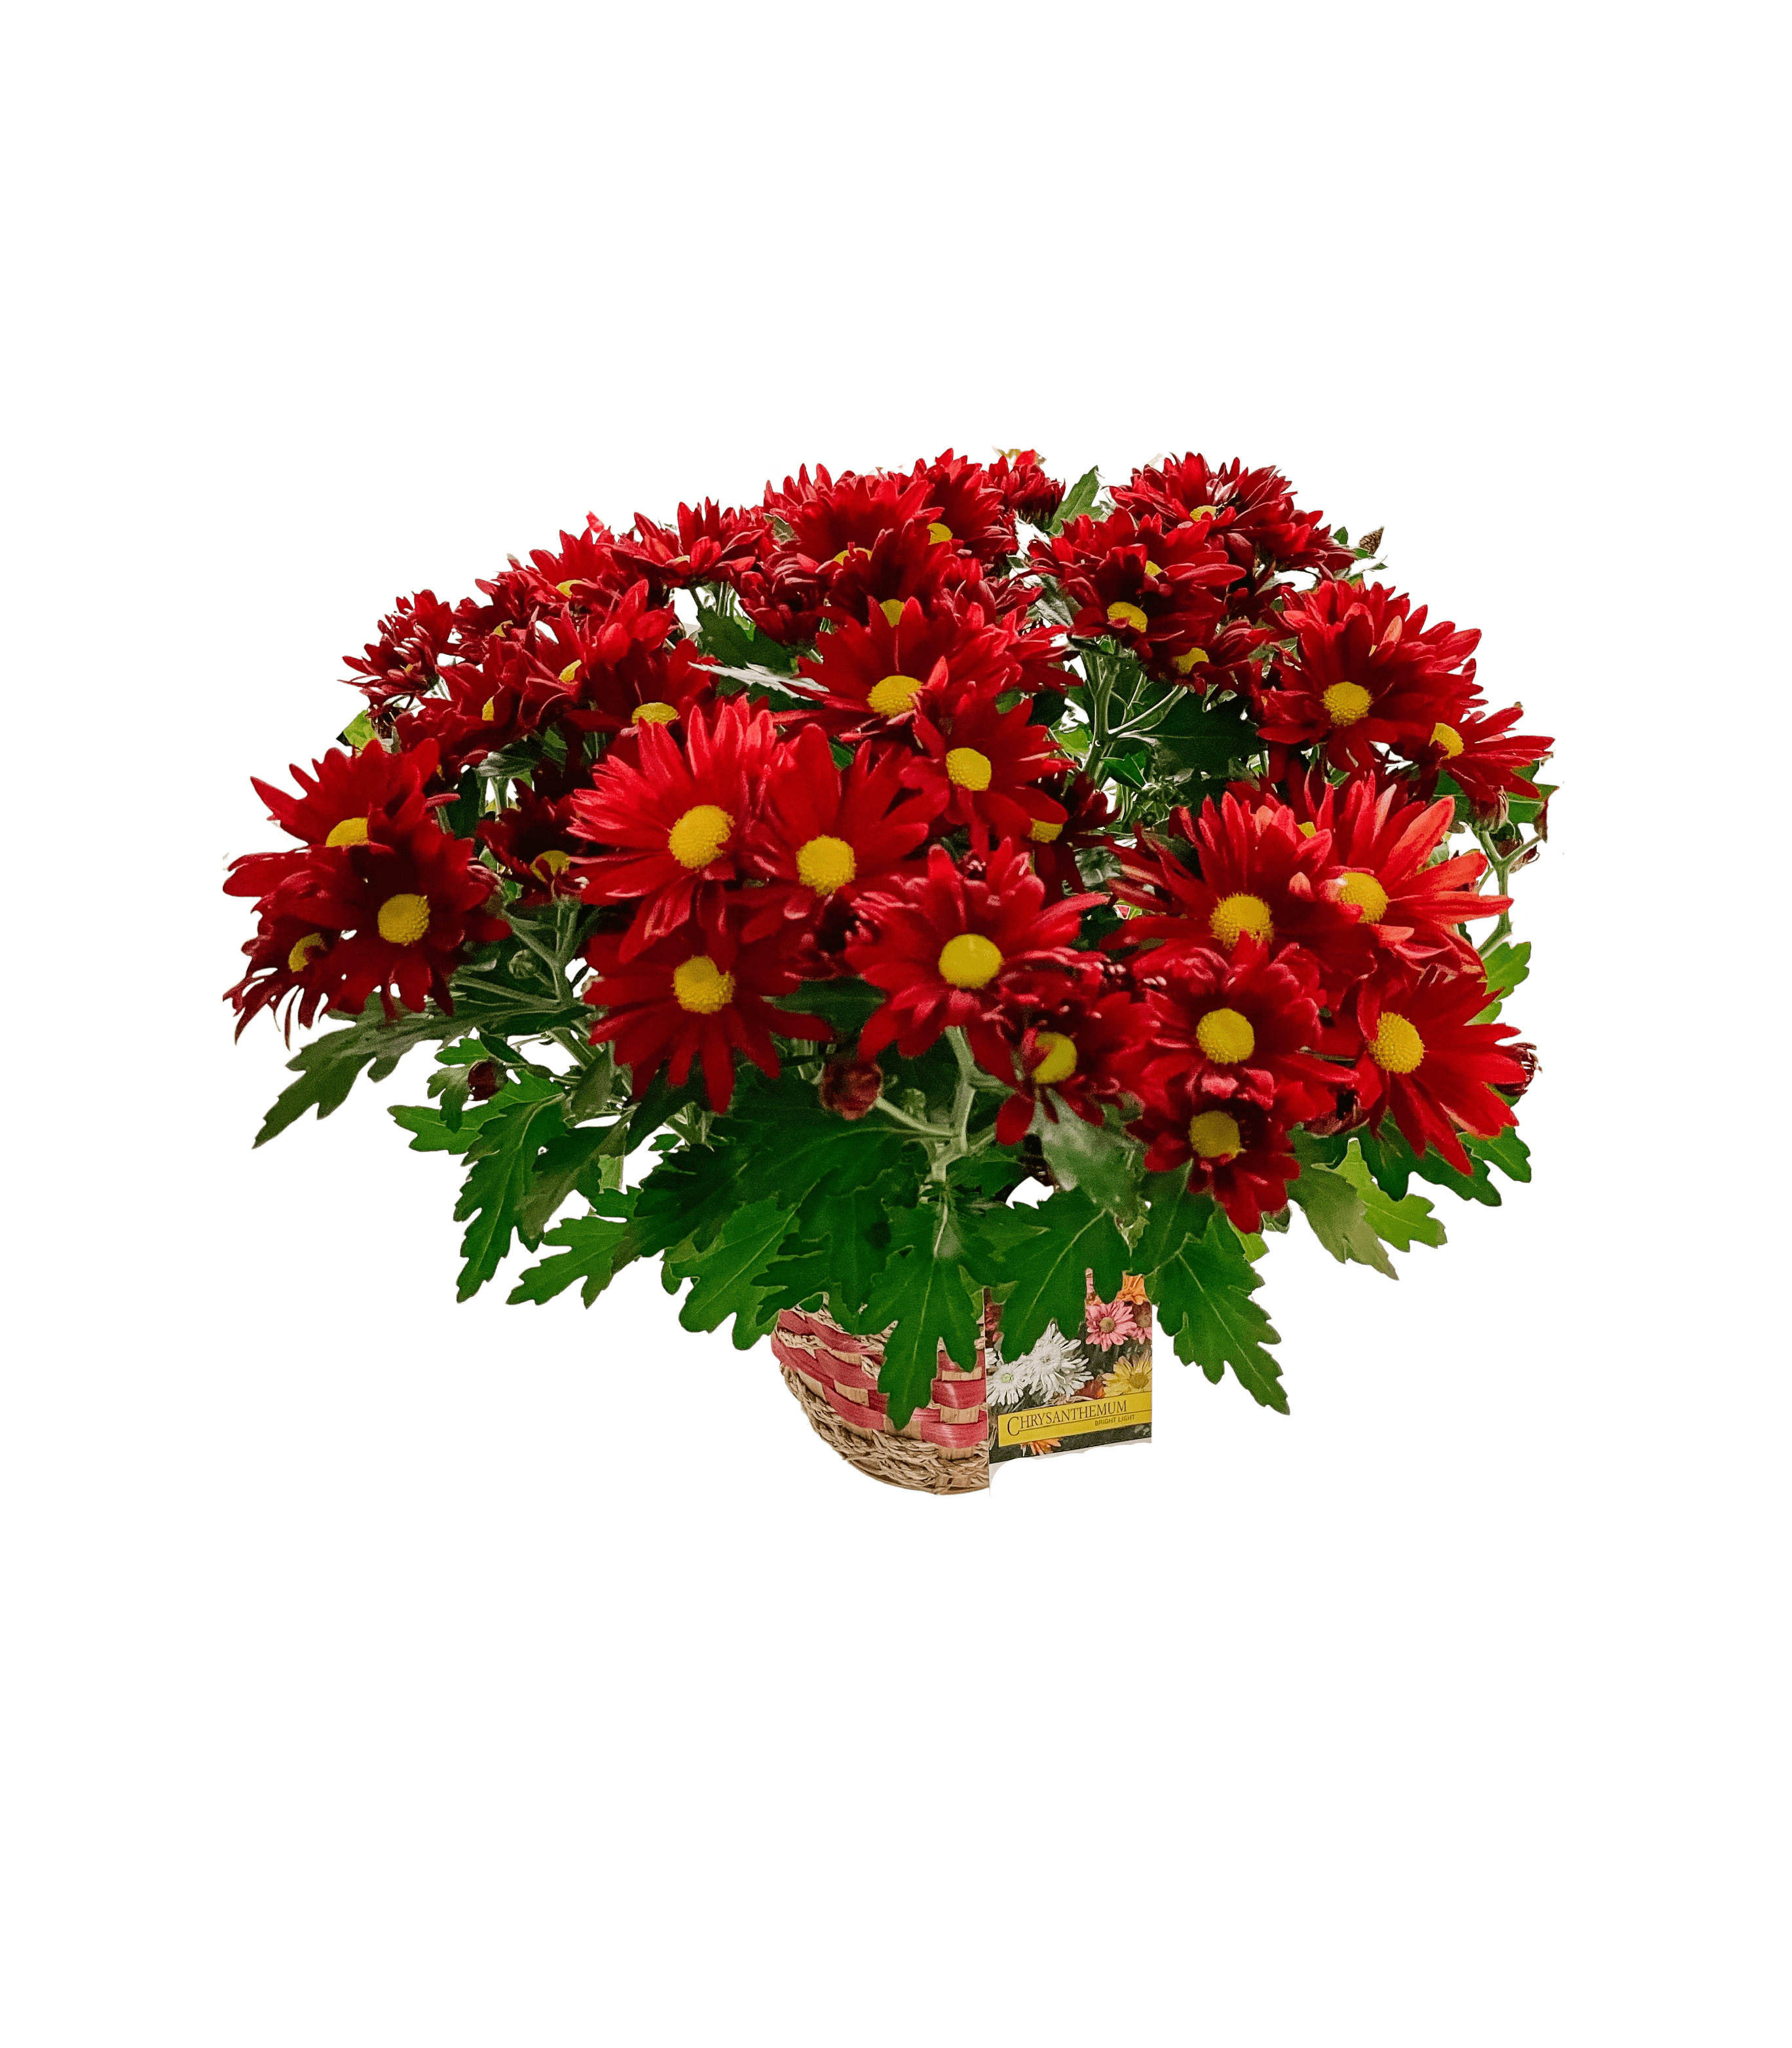 Chrysanthemum (Mum) - Small flower arrangement